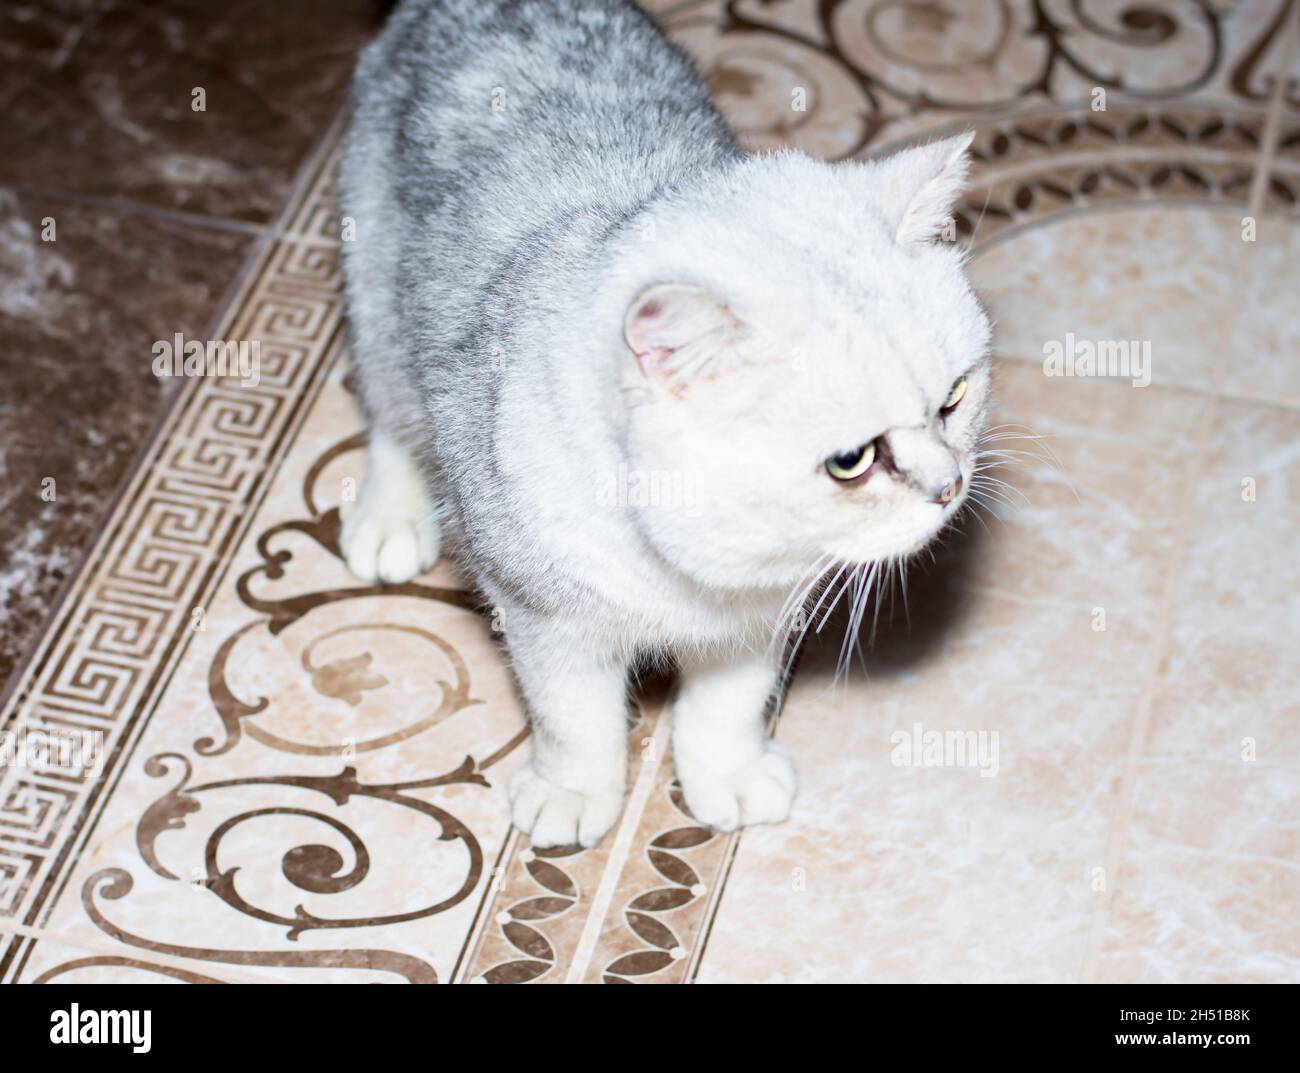 British silver chinchilla cat on the floor, pet cats theme Stock Photo